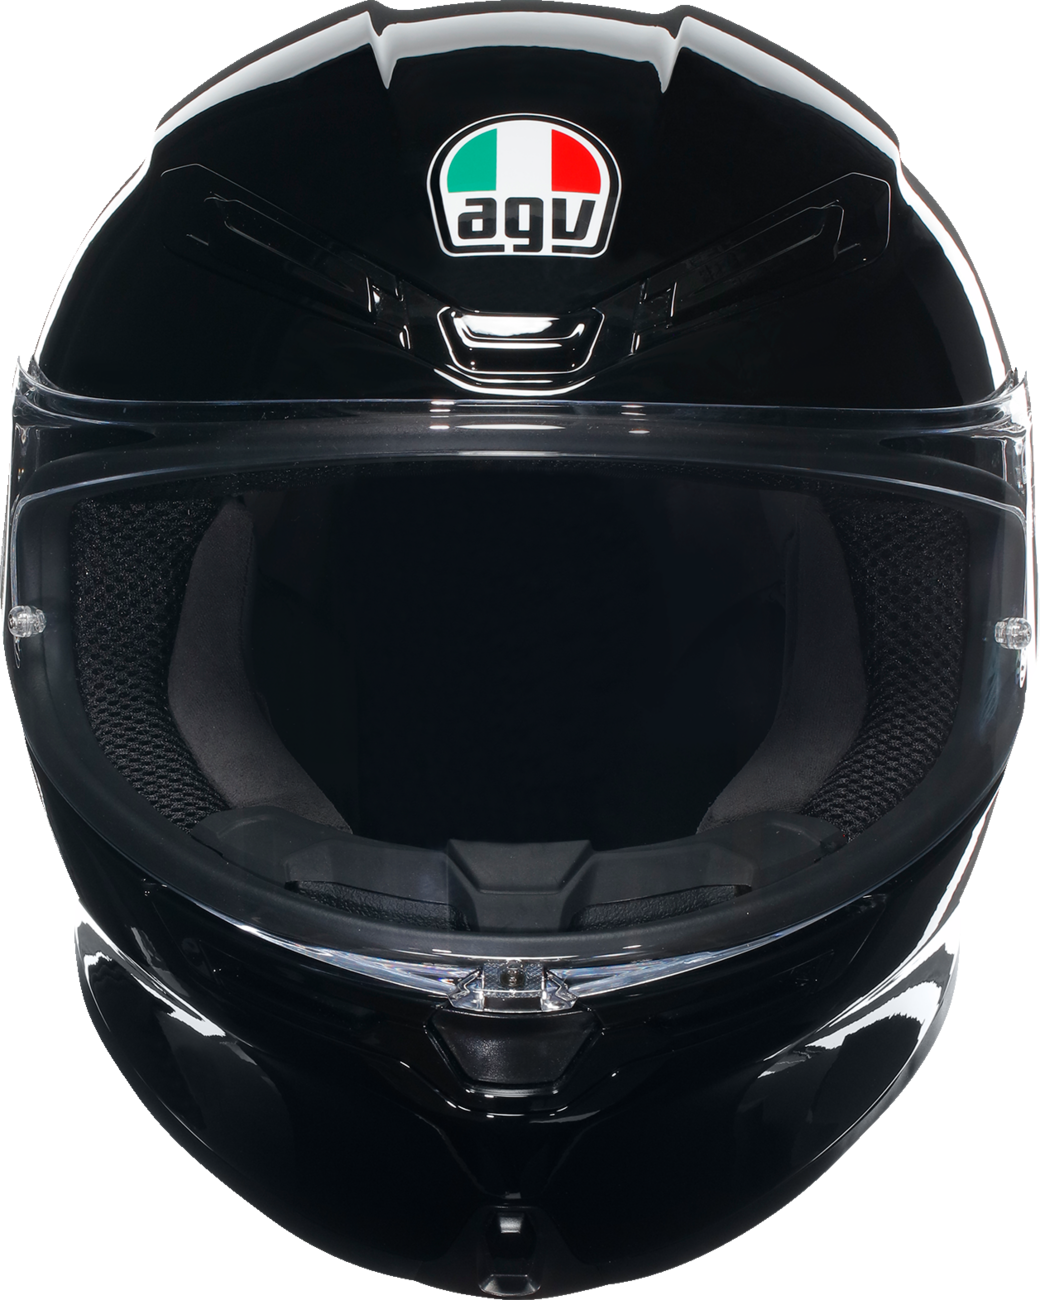 AGV K6 S Helmet - Black - Medium 2118395002009M